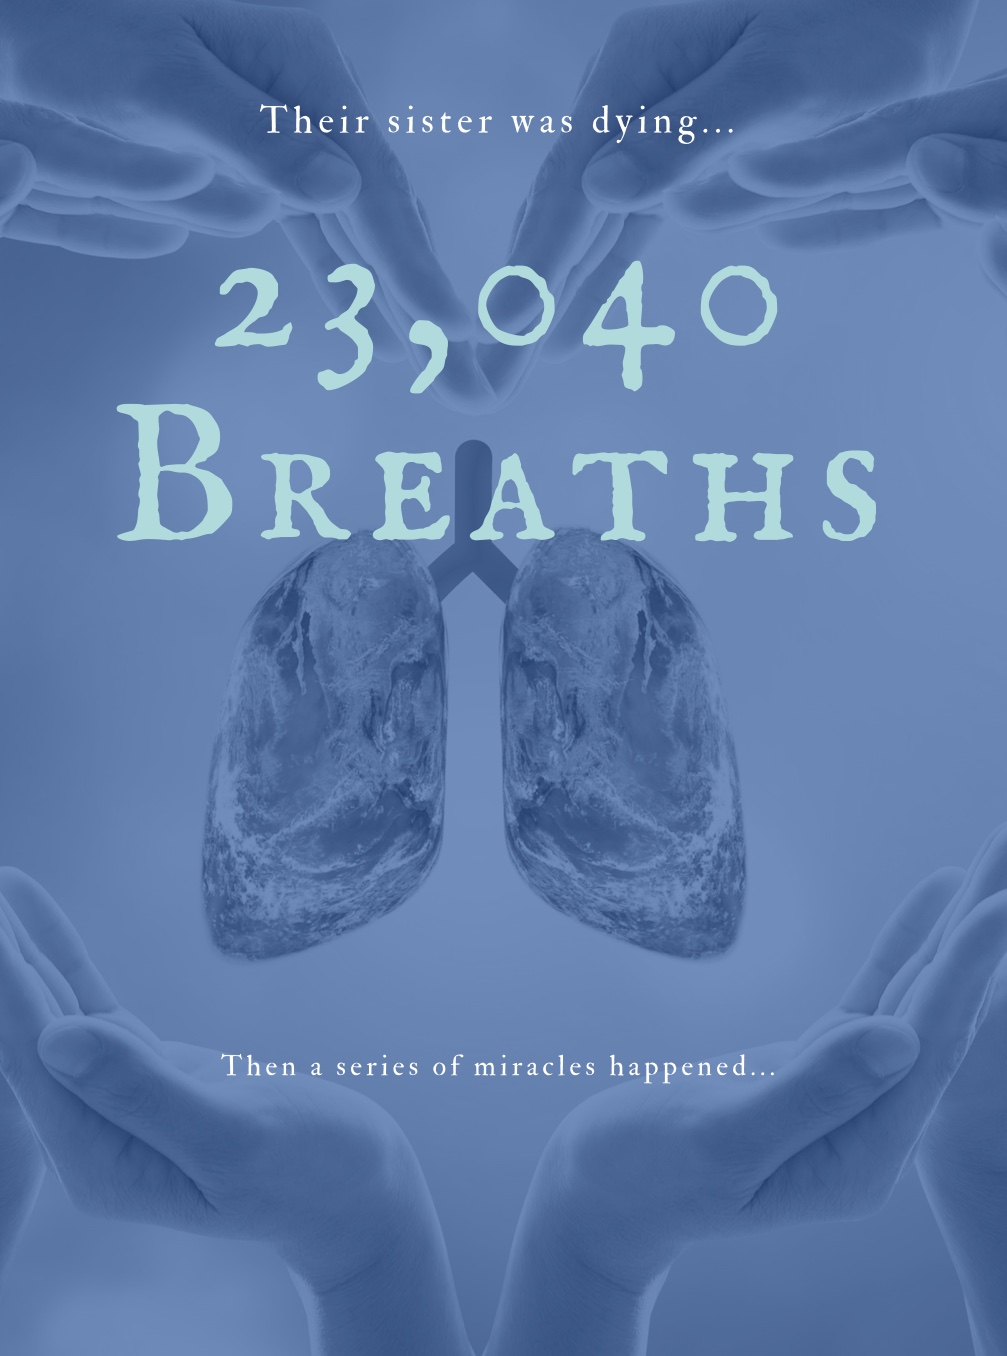 23,040 Breaths (2021)